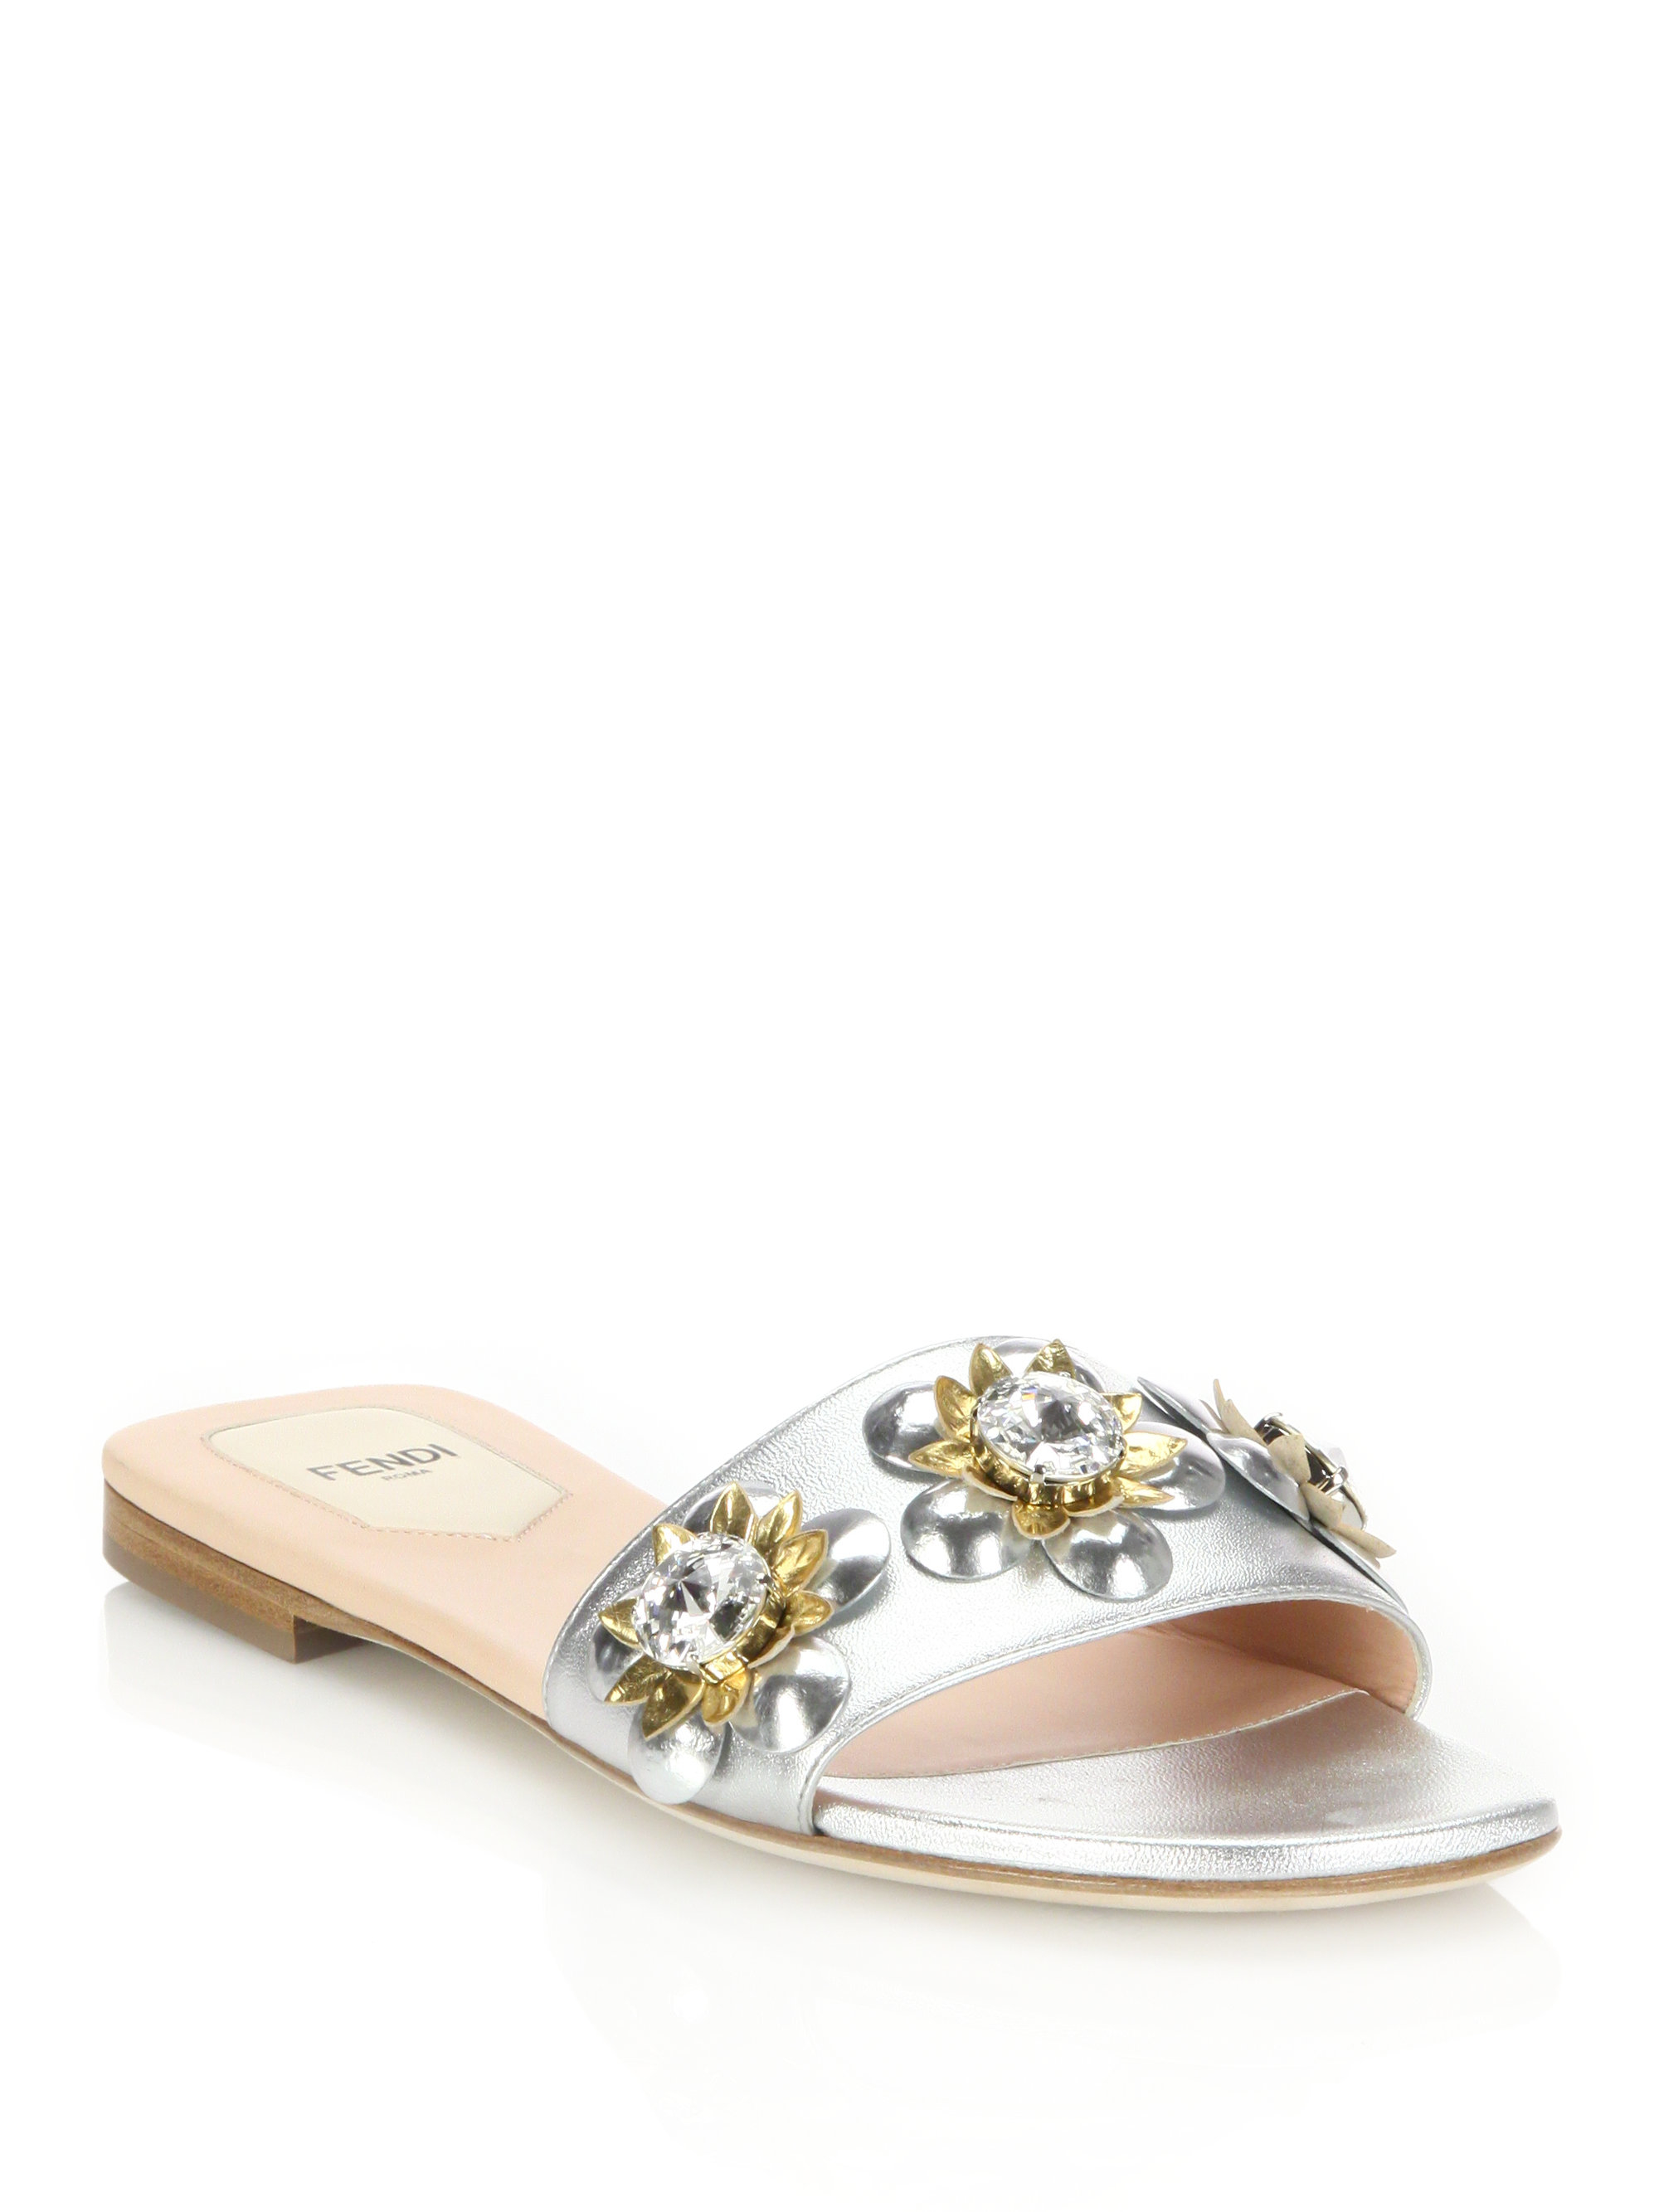 Fendi Flowerland Jeweled Metallic Leather Slides in White | Lyst